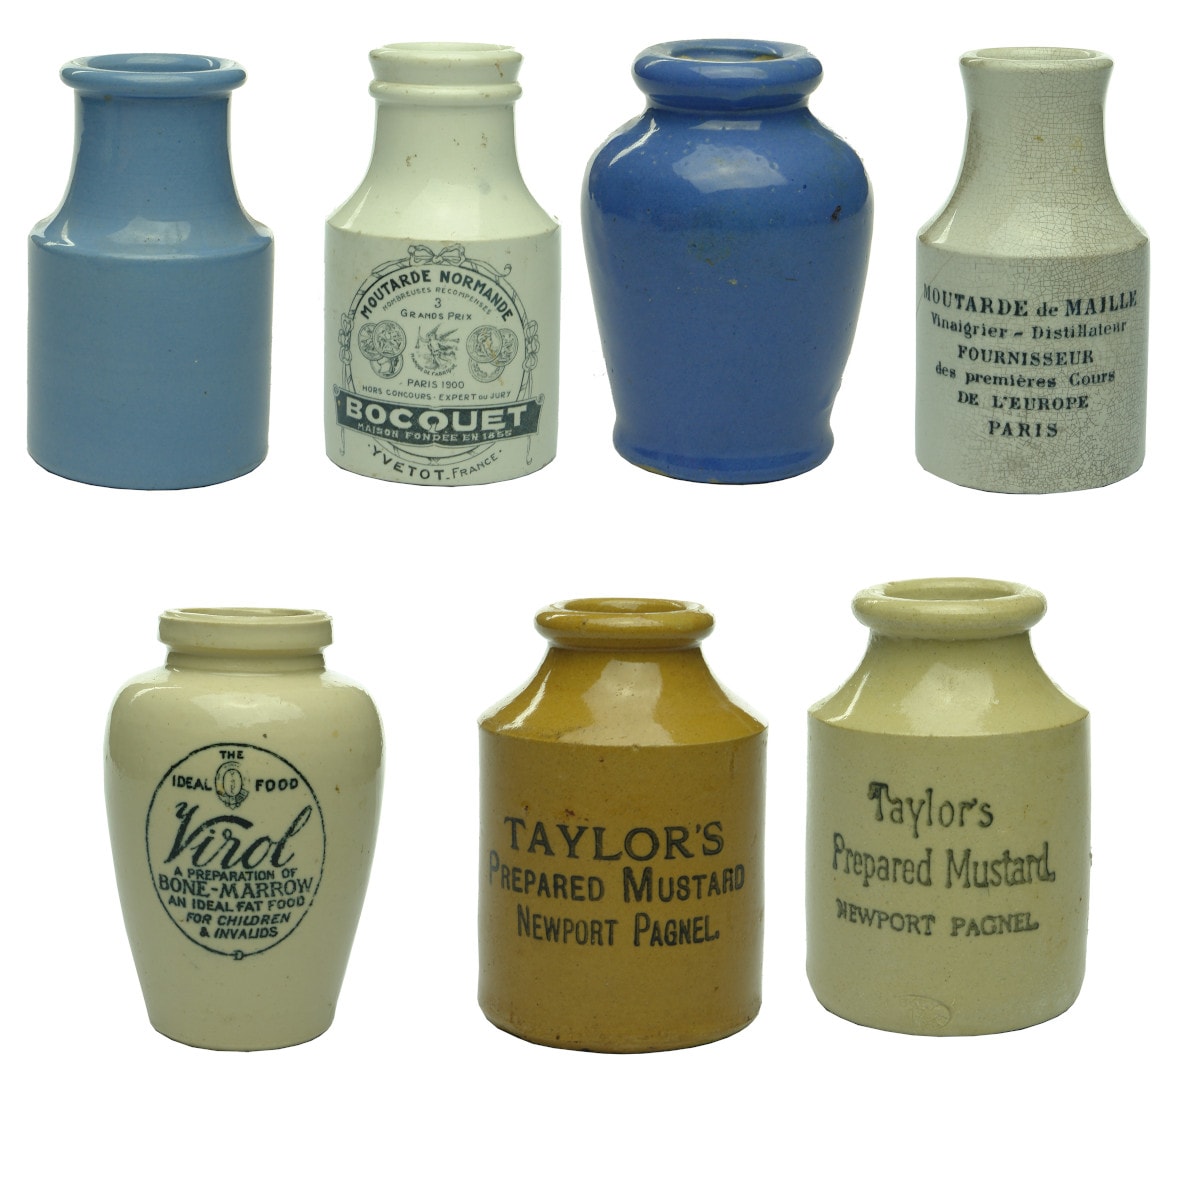 7 Household Jars. Plain blue jar; Moutarde Normande, Yvetot, France; Plain blue internal thread jar; Virol Bone-Marrow; Taylor's Prepared Mustard, Newport Pagnel, all tan & all white; Moutarde de Maille, Paris.